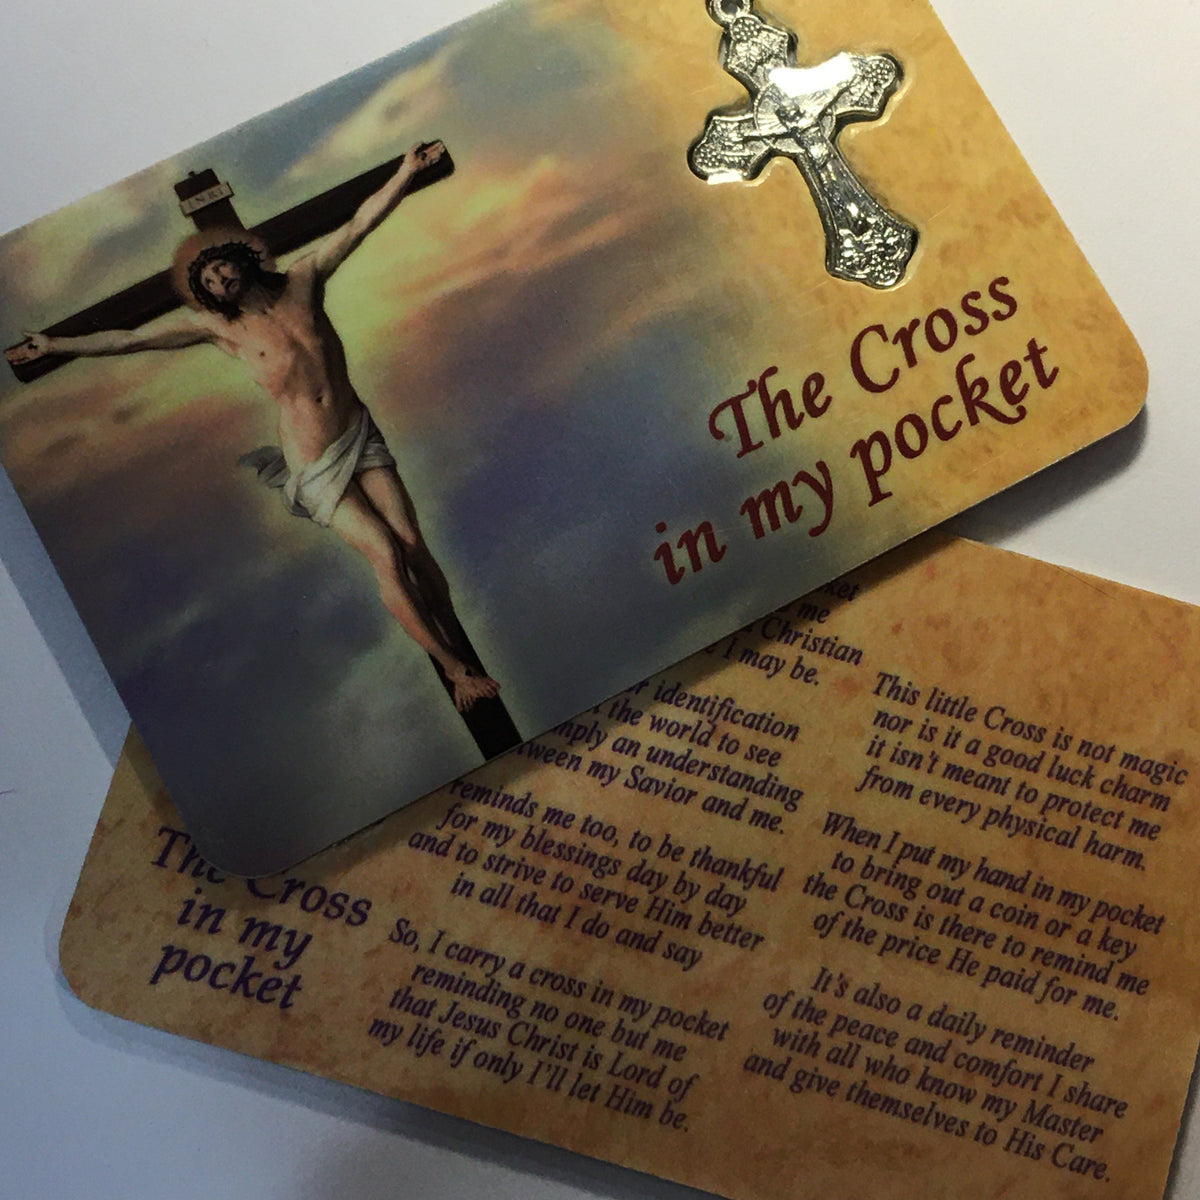 The Cross In My Pocket